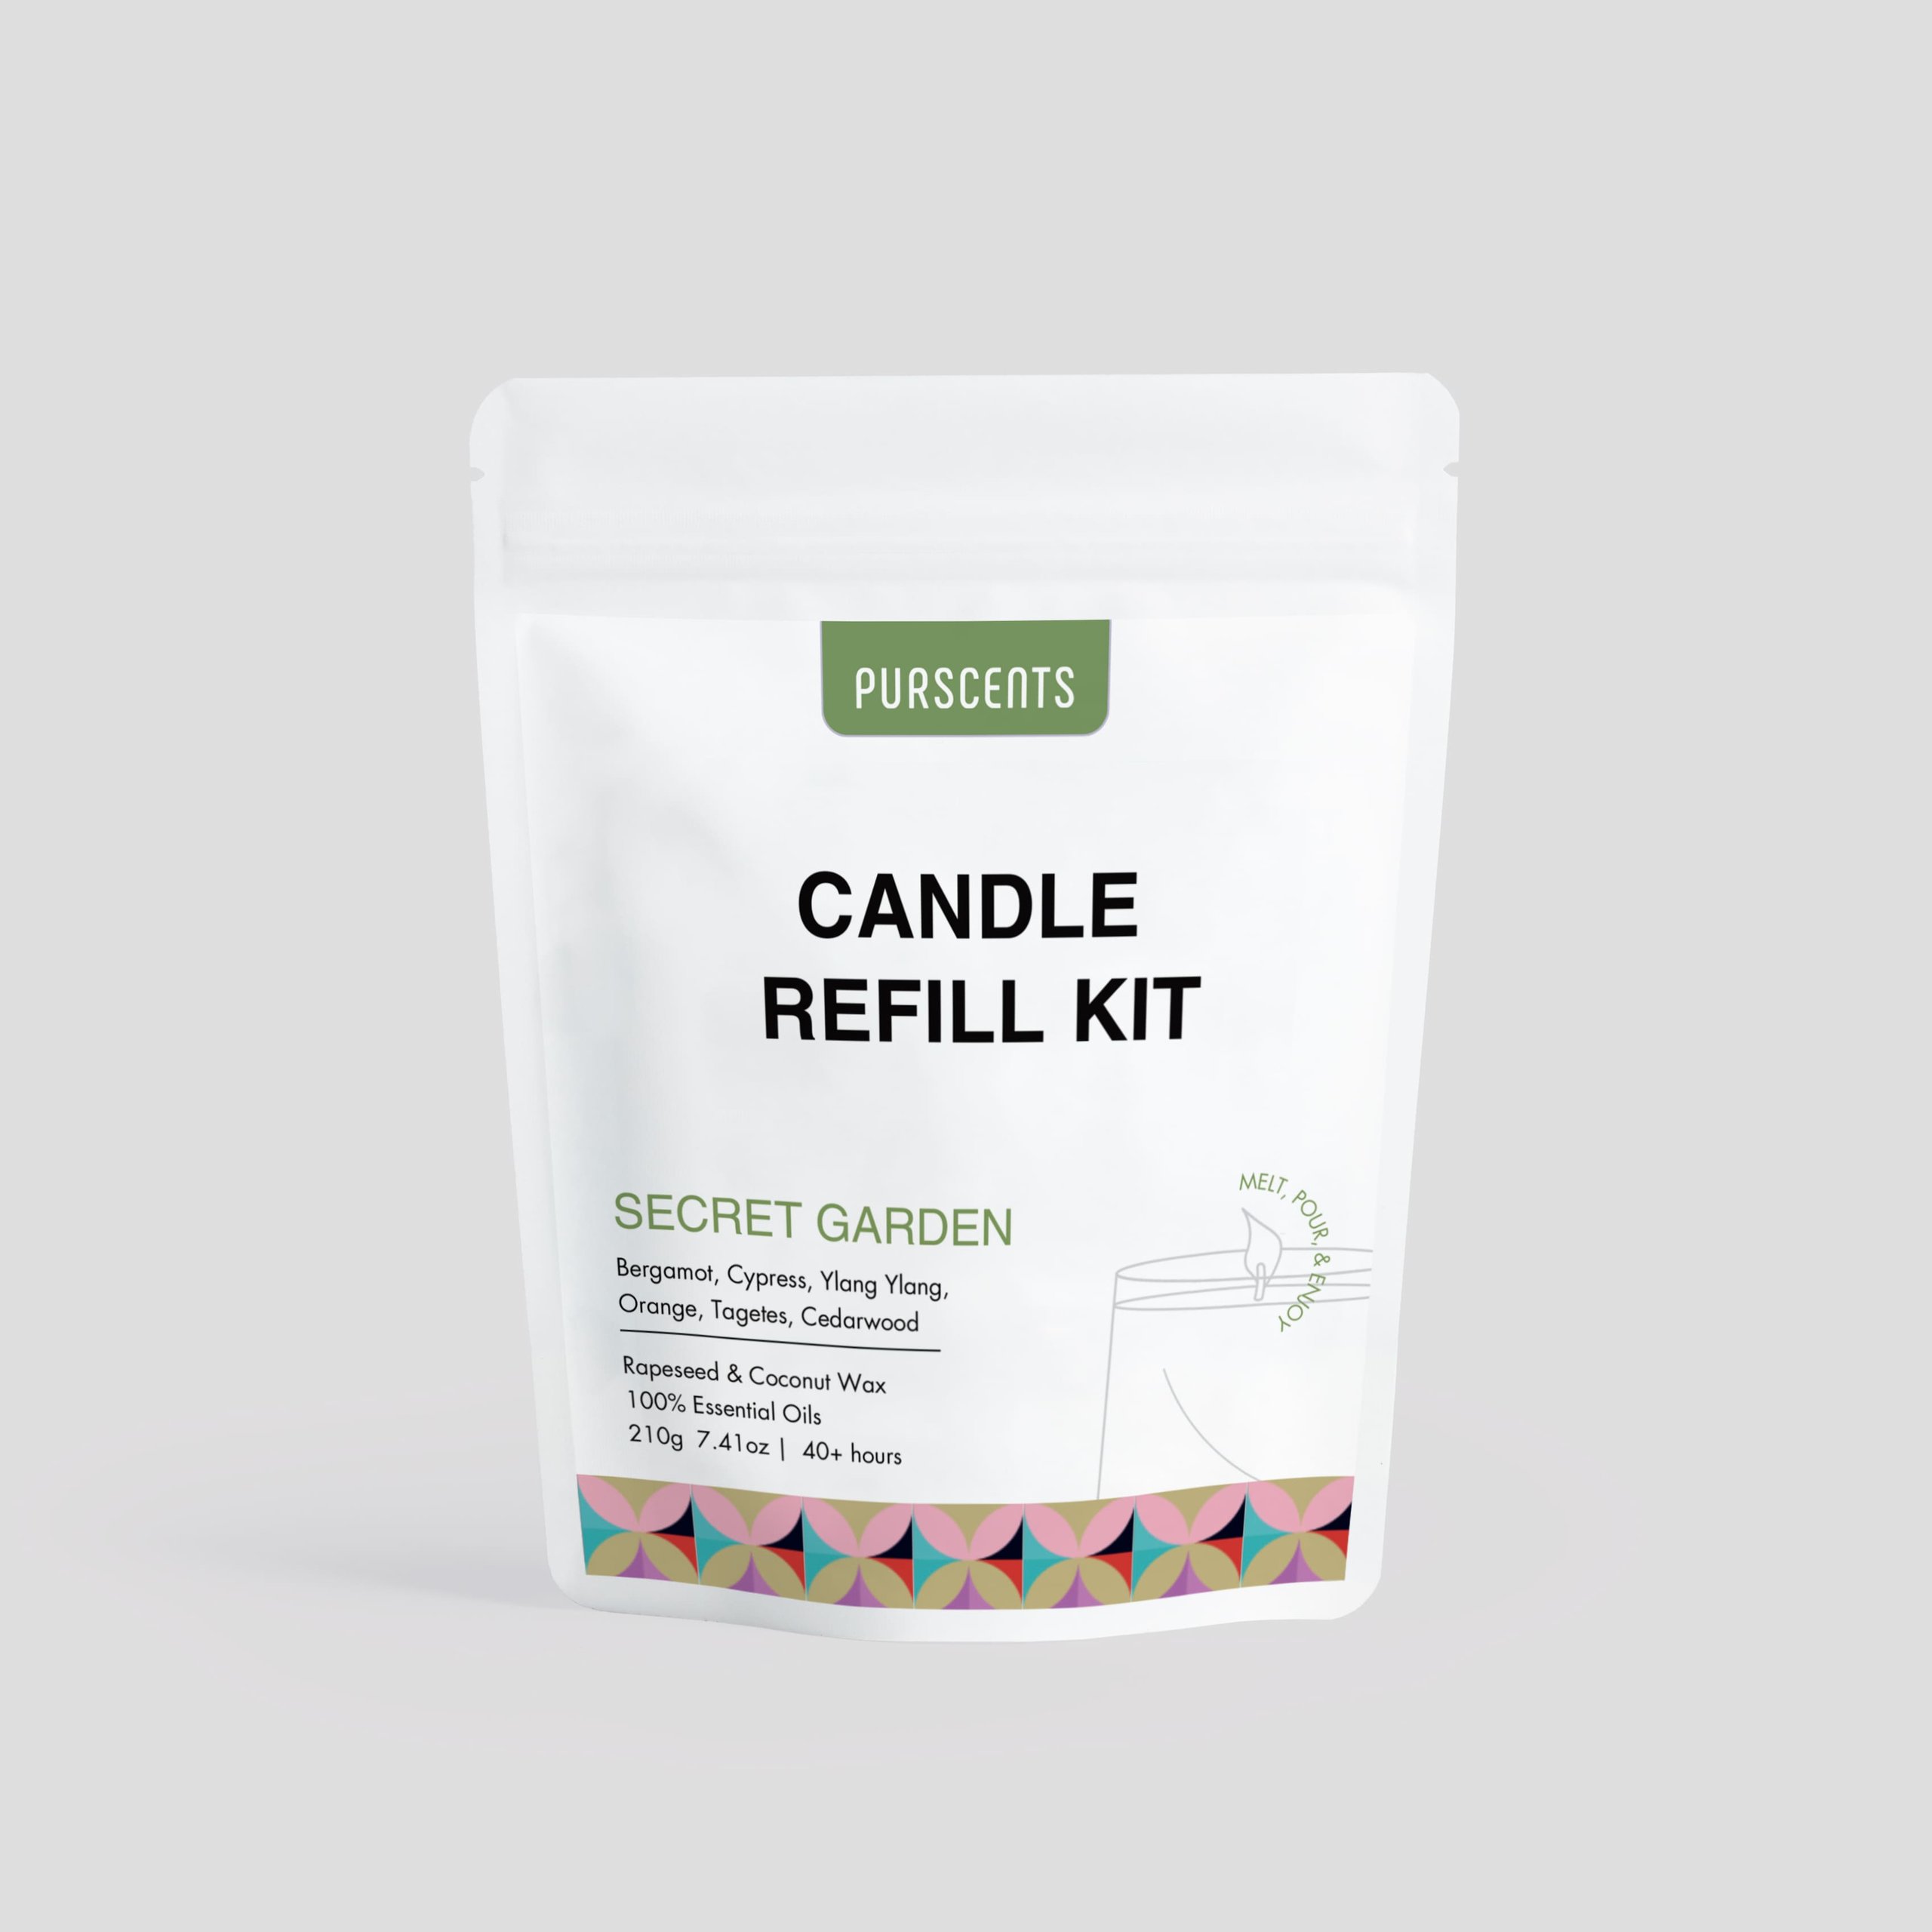 Secret Garden Candle Refill Kit